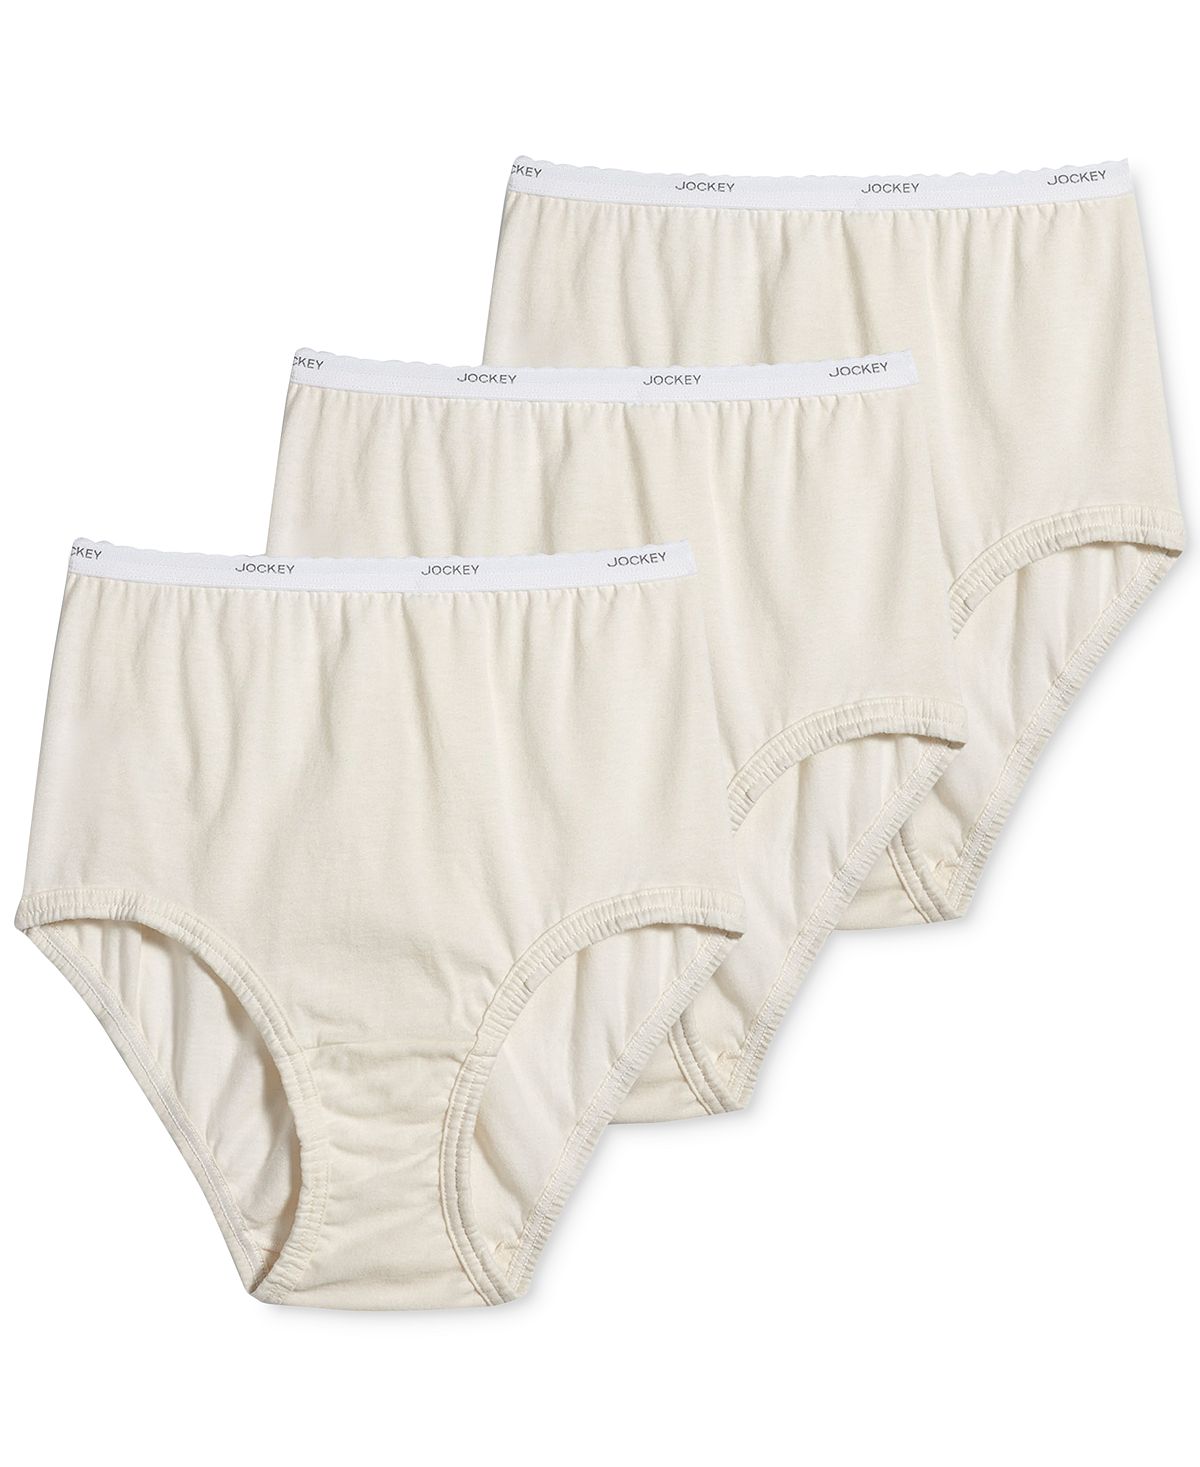 Jockey Classics Brief Underwear 3 Pack 9482 Ivory (Nude 5)